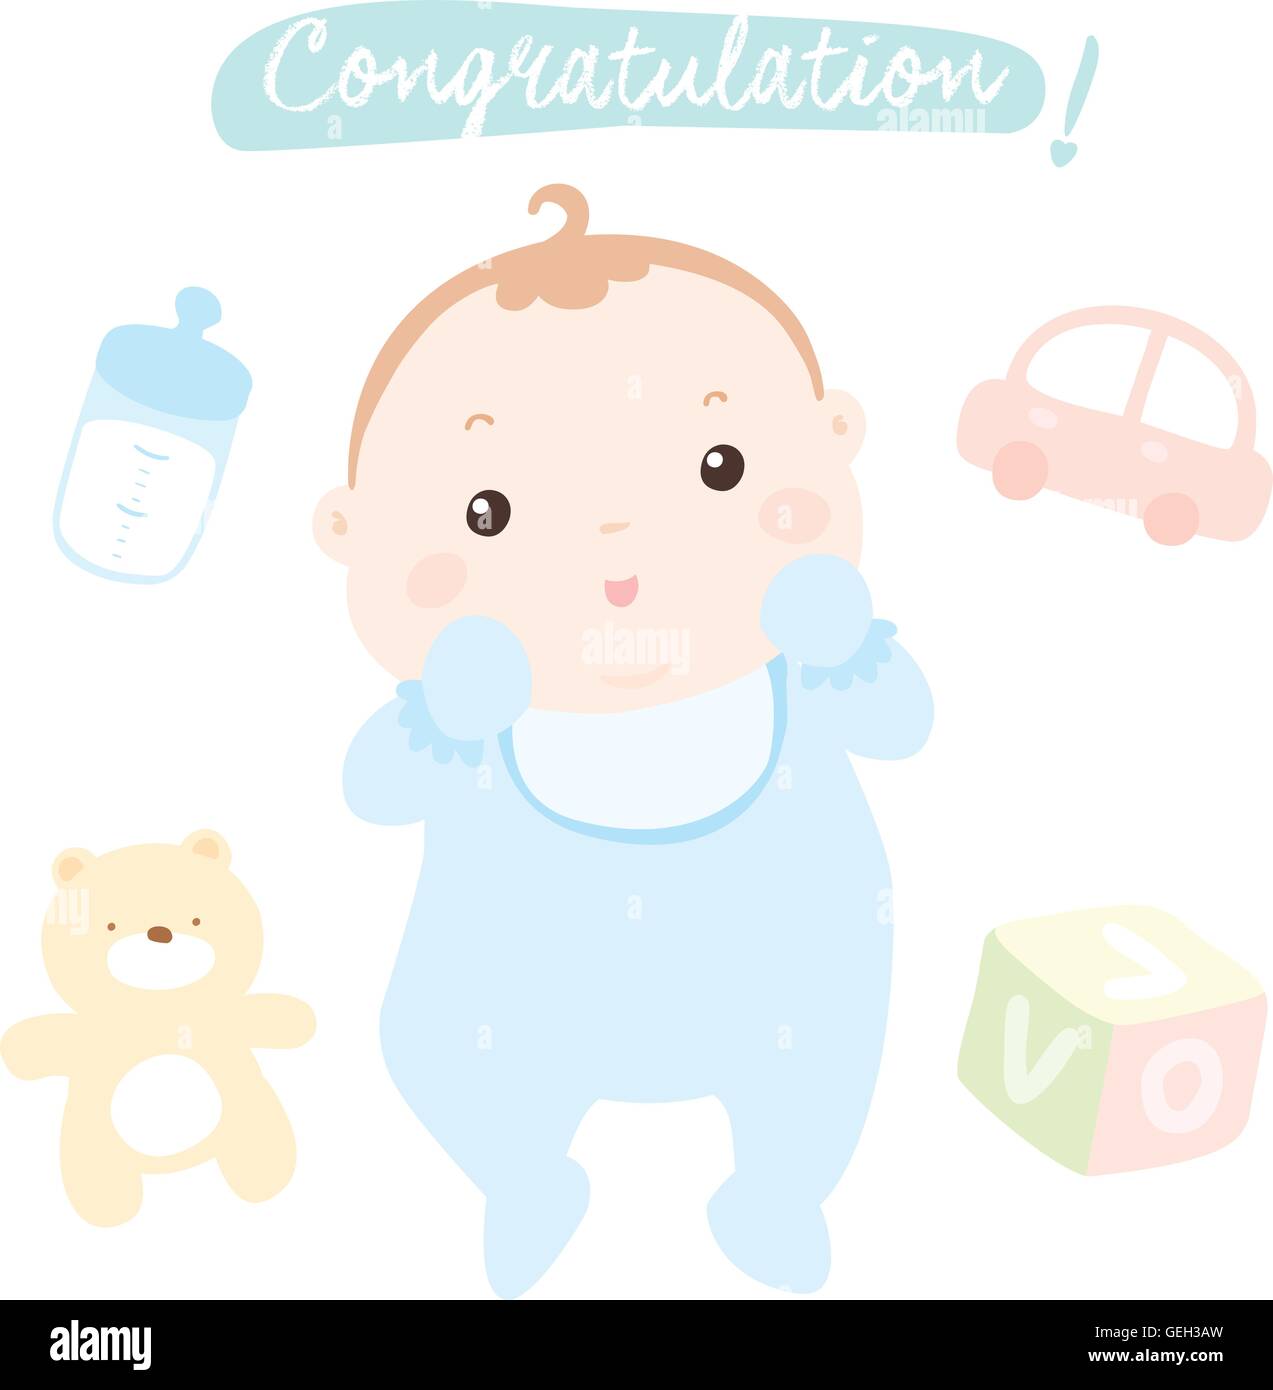 congratulation new little baby boy vector illustration Stock ...